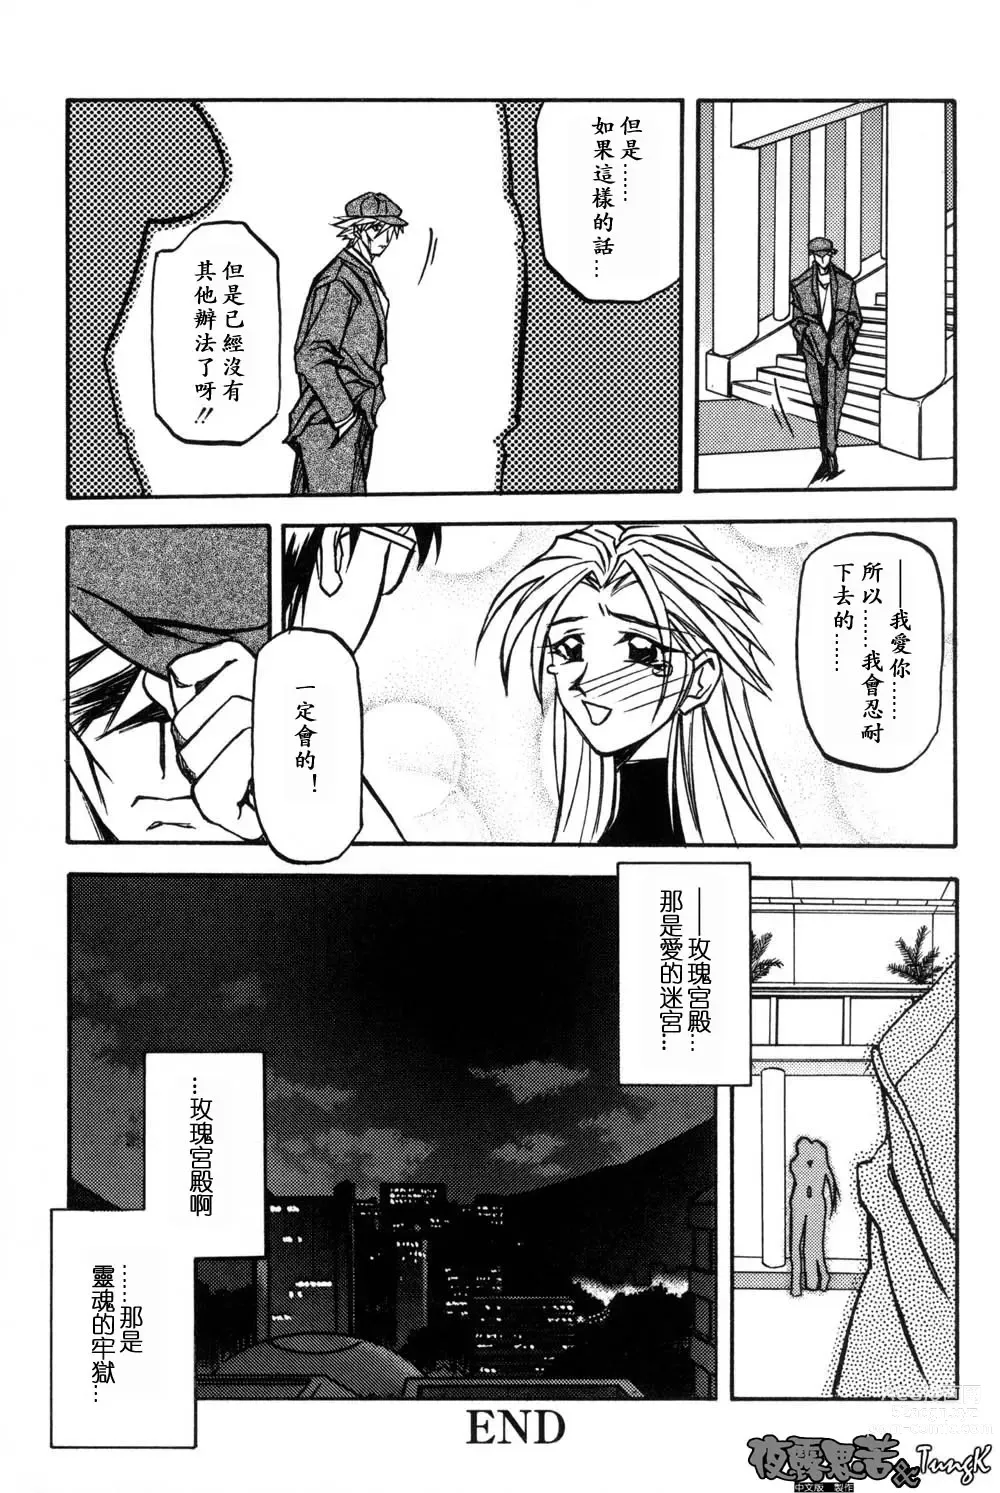 Page 176 of manga 沒有窗戶的小屋